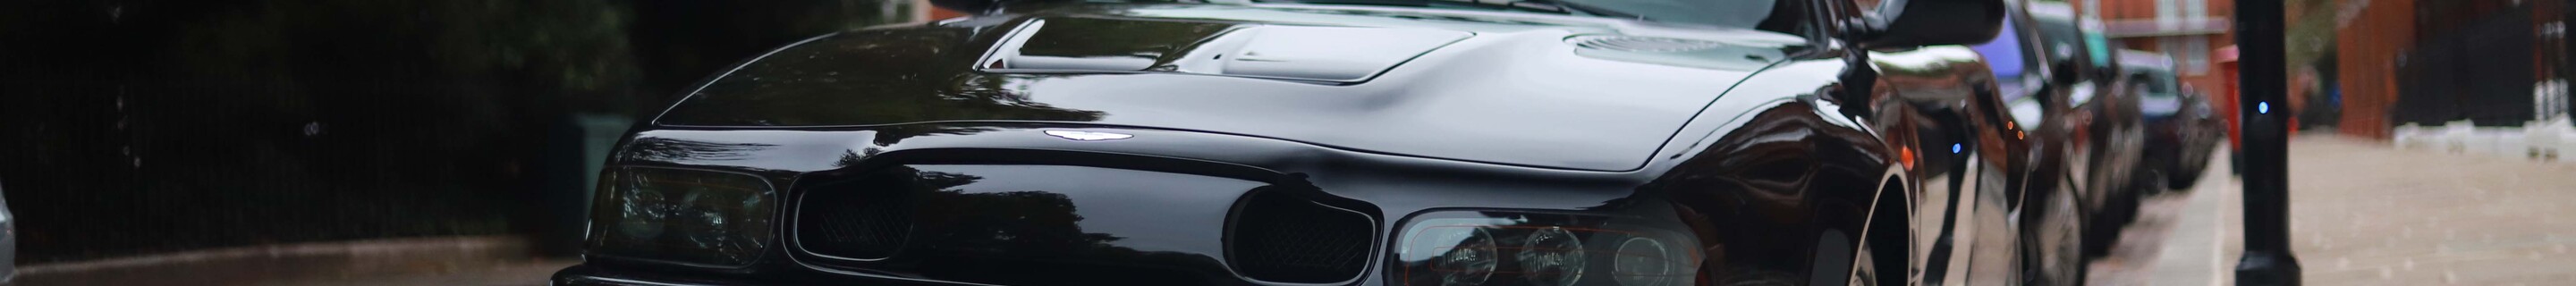 Aston Martin V8 Vantage Le Mans